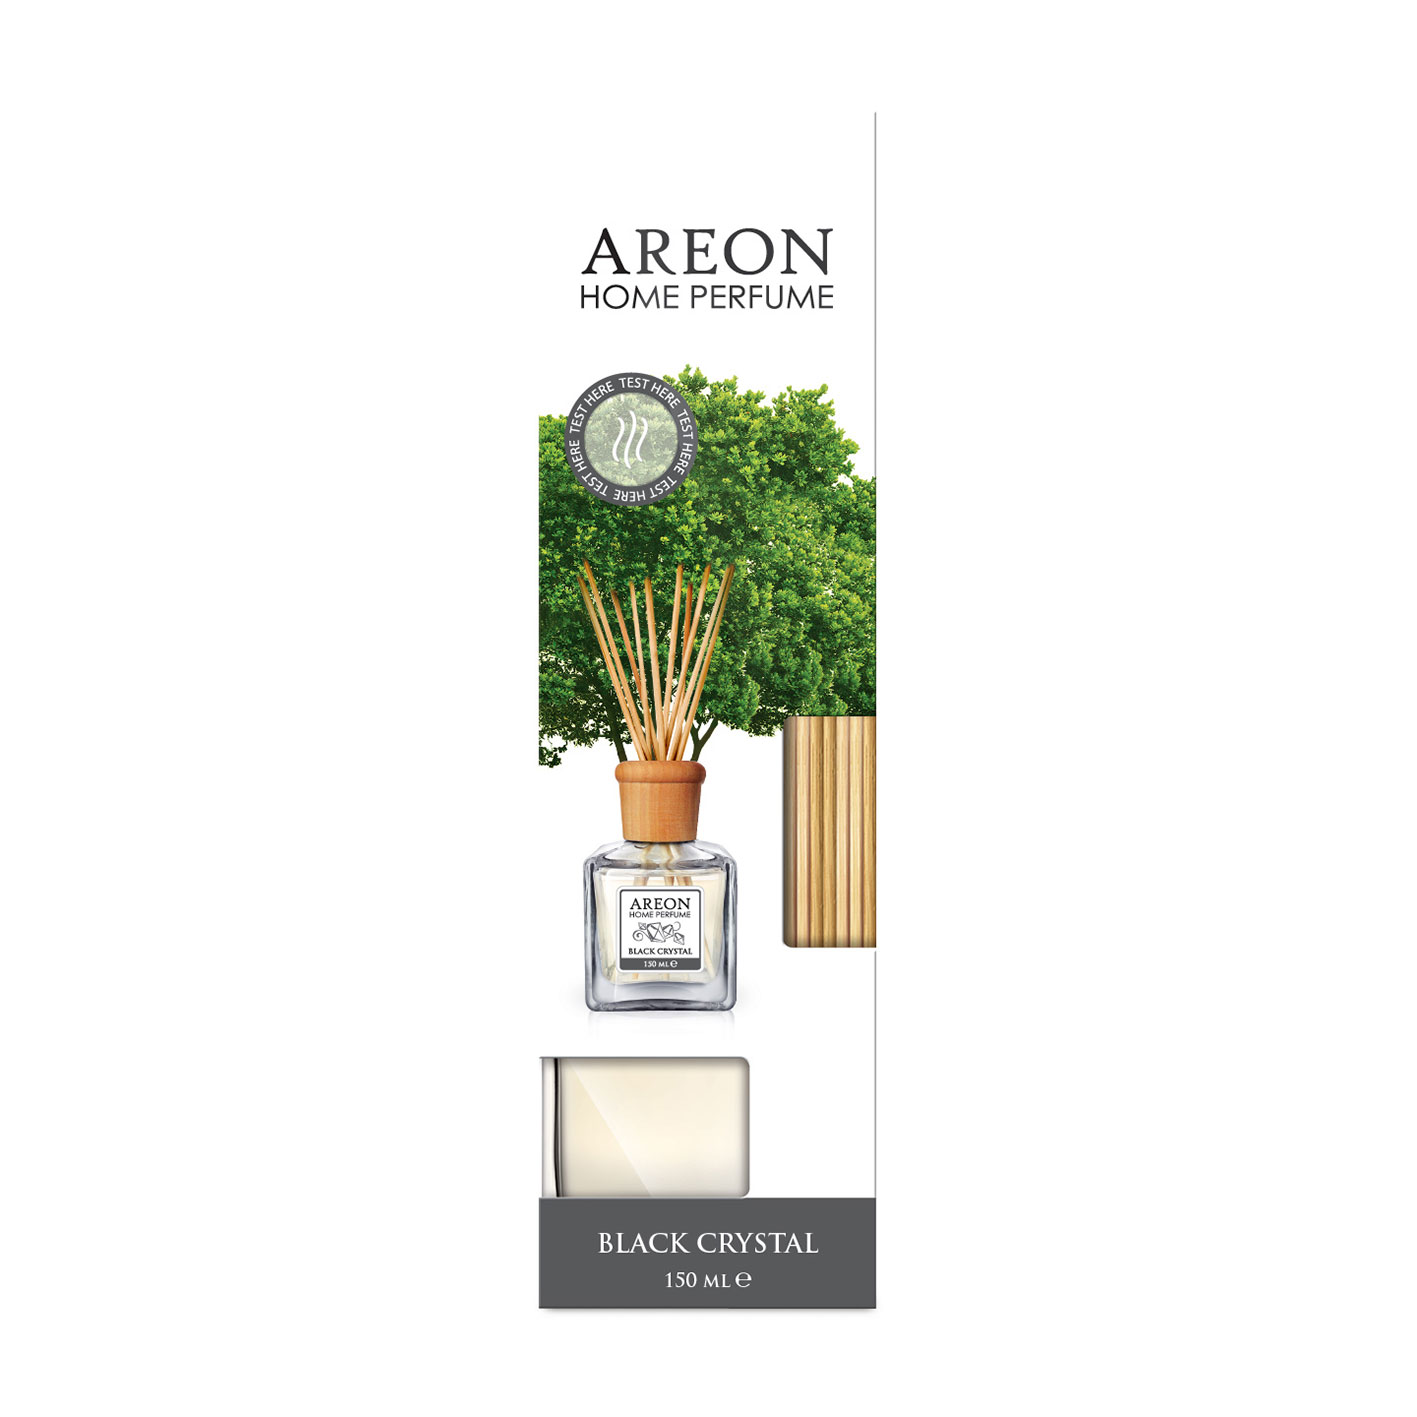 Areon Home Perfume 150ml Black Crystal